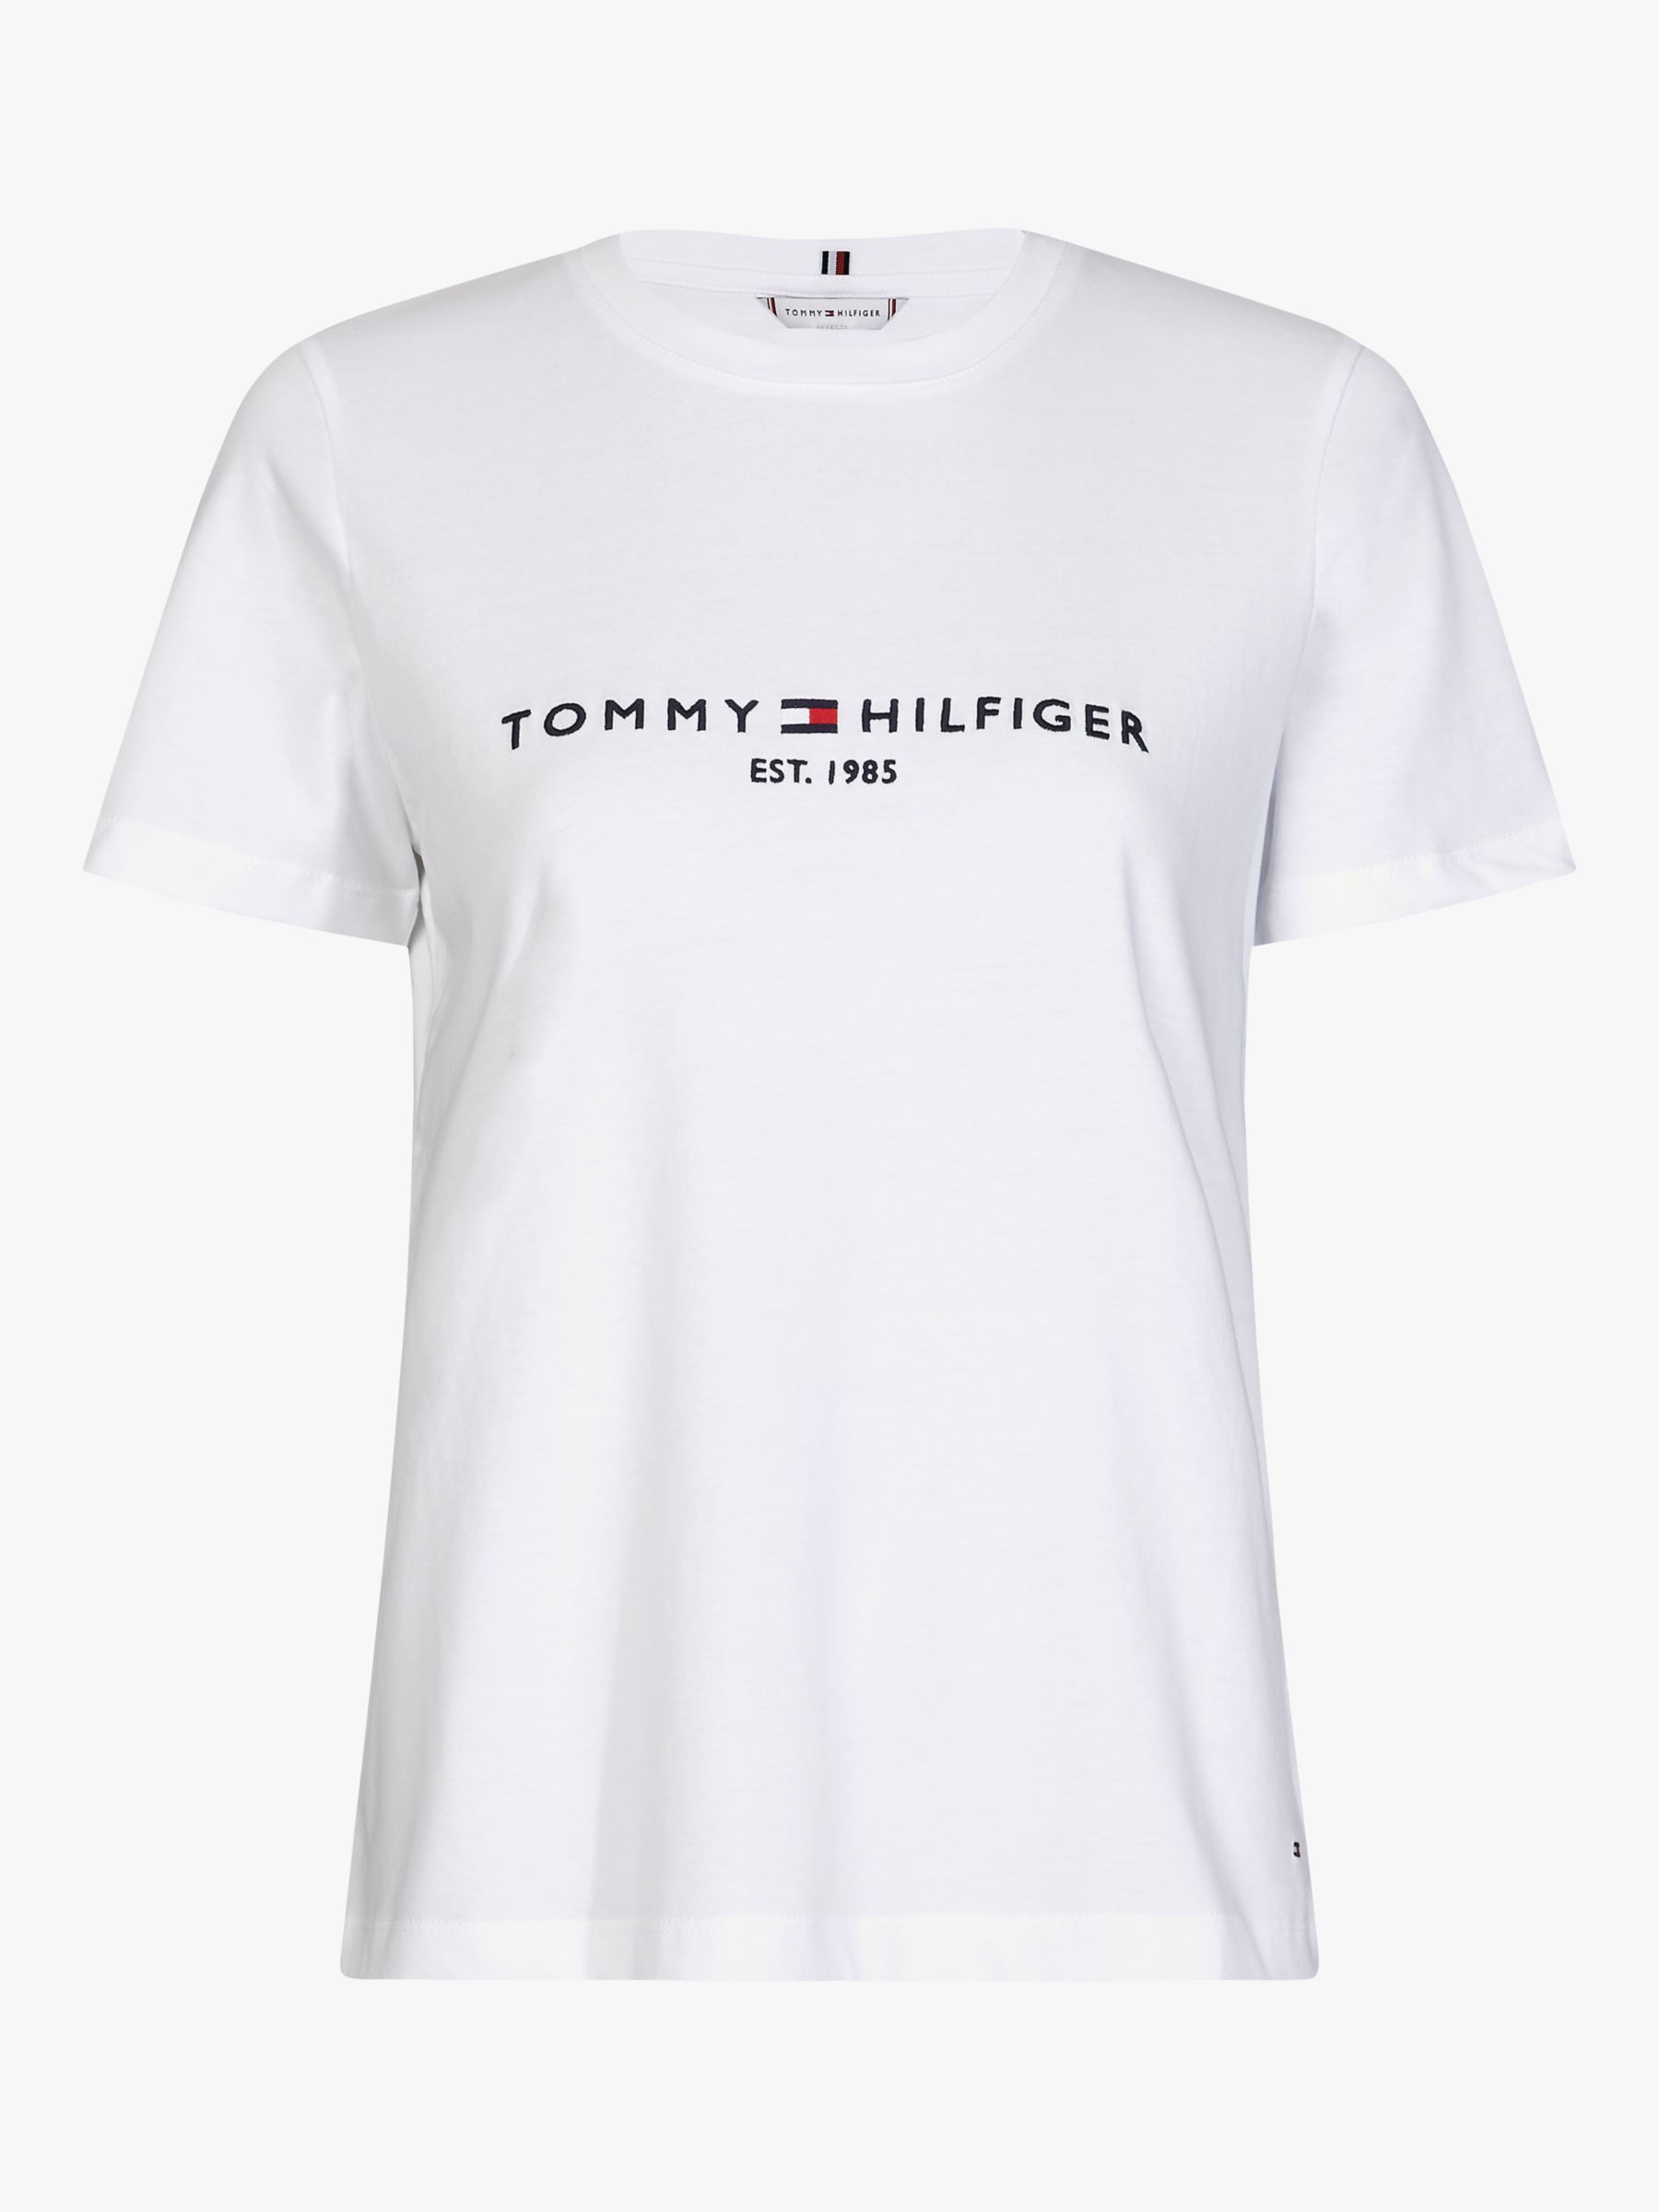 tommy hilfiger t shirt women's logo white